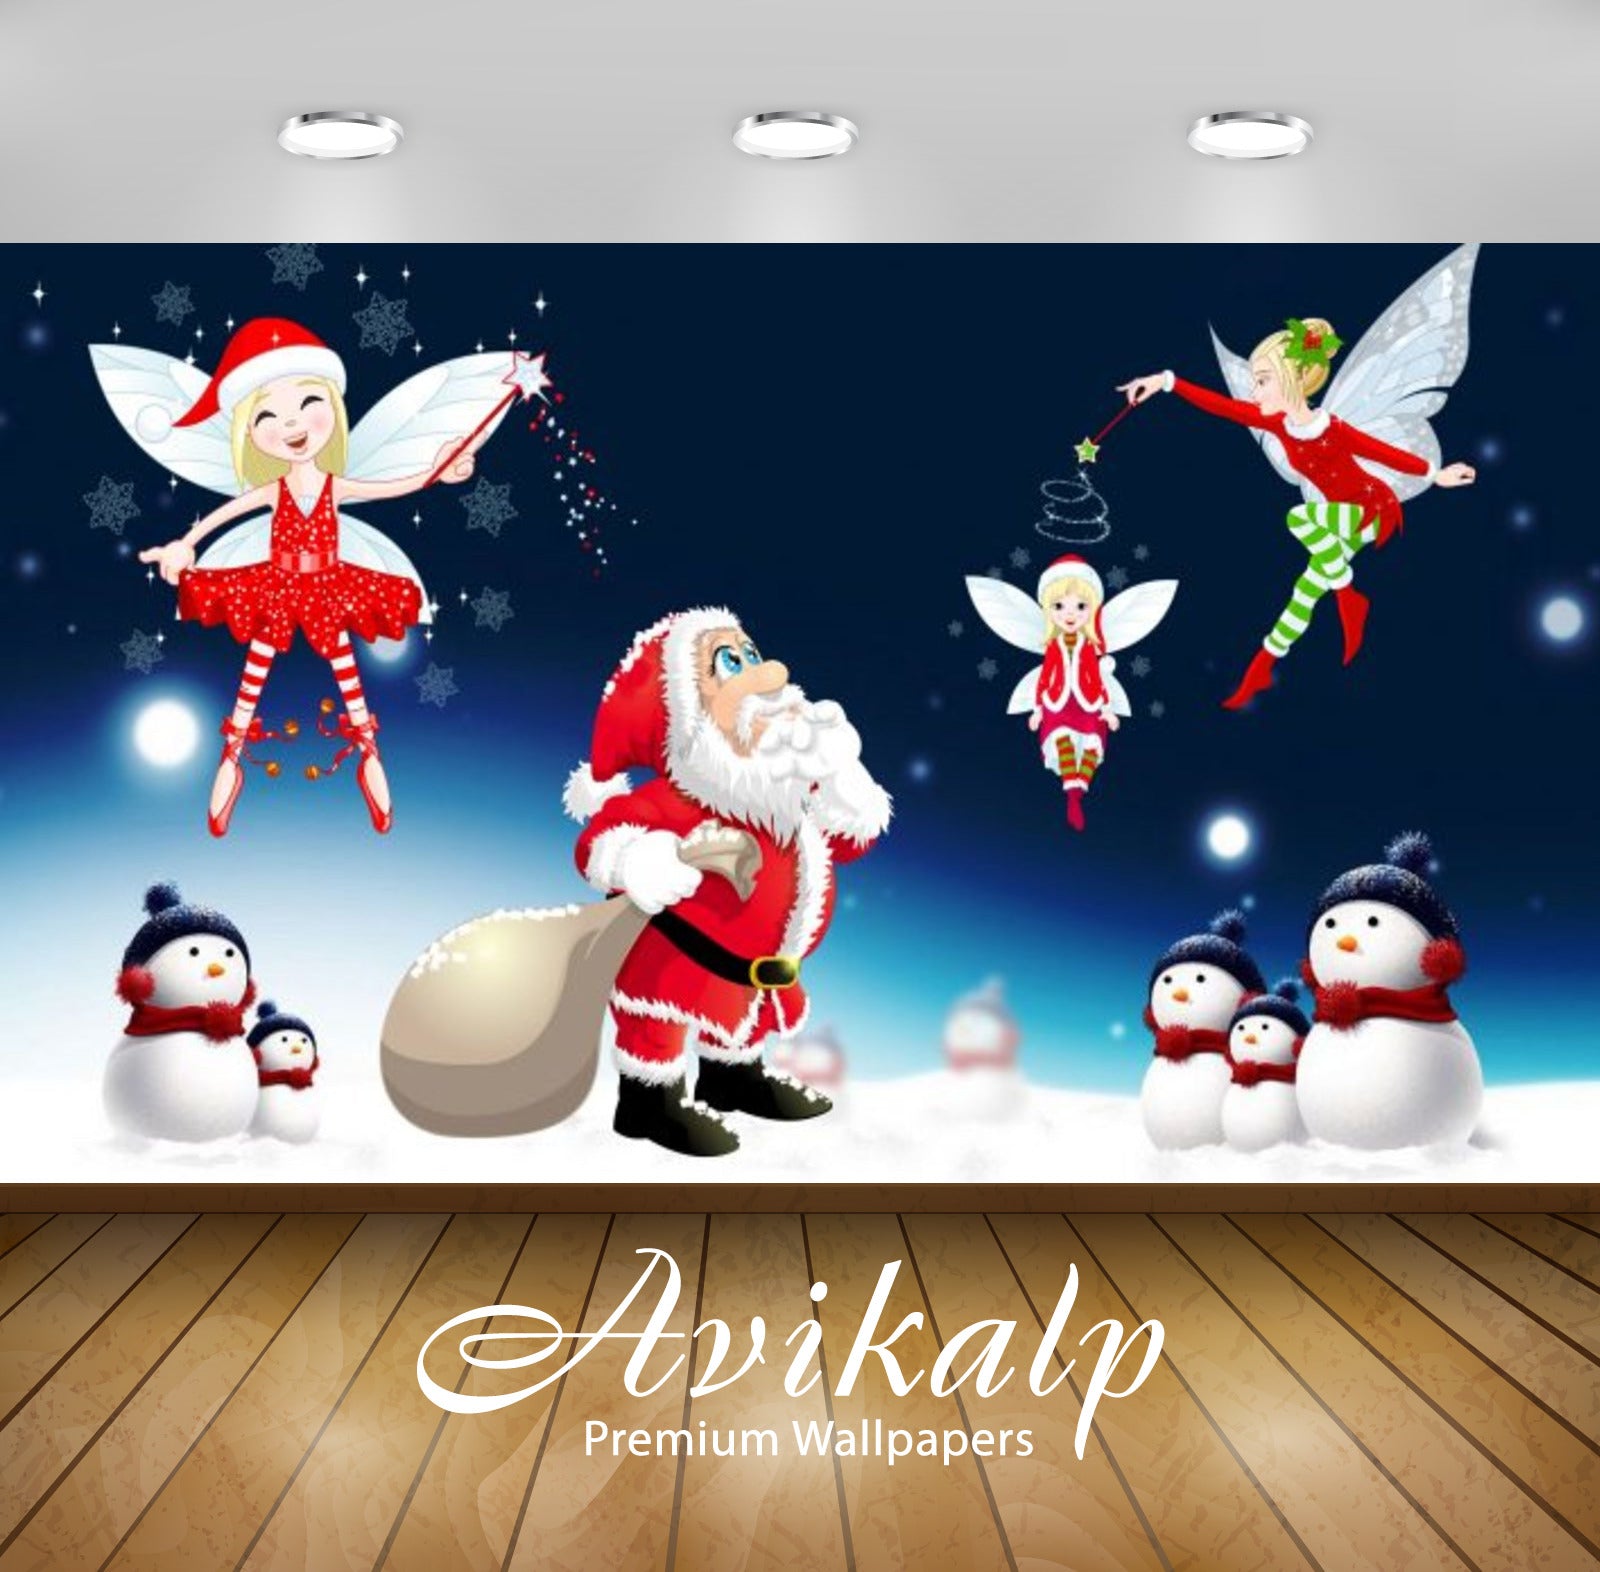 Avikalp Exclusive Awi2088 Merry Christmas Santa Claus   Full HD Wallpapers for Living room, Hall, Ki